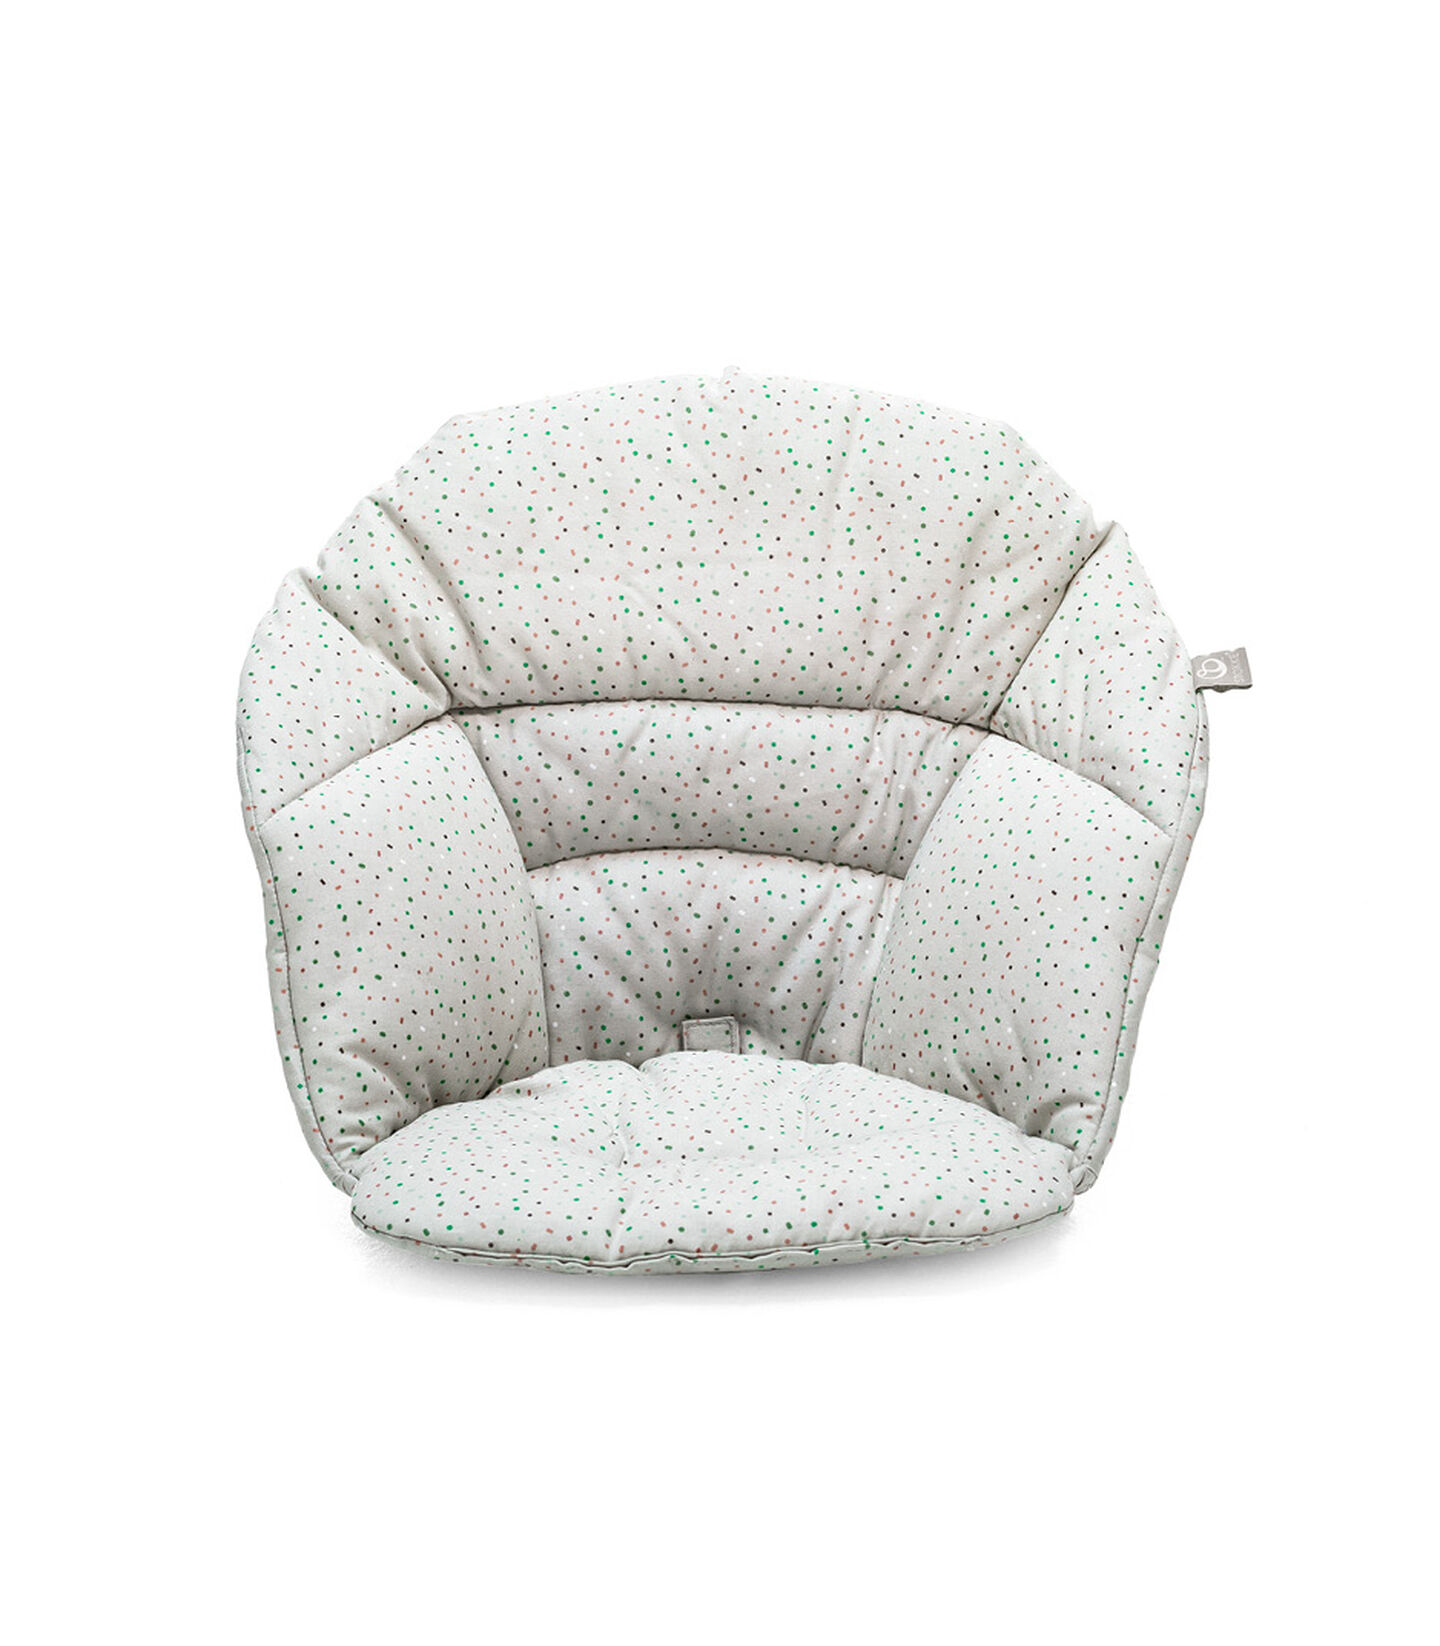 Stokke® Clikk™ Cushion in Grey Sprinkle. view 1